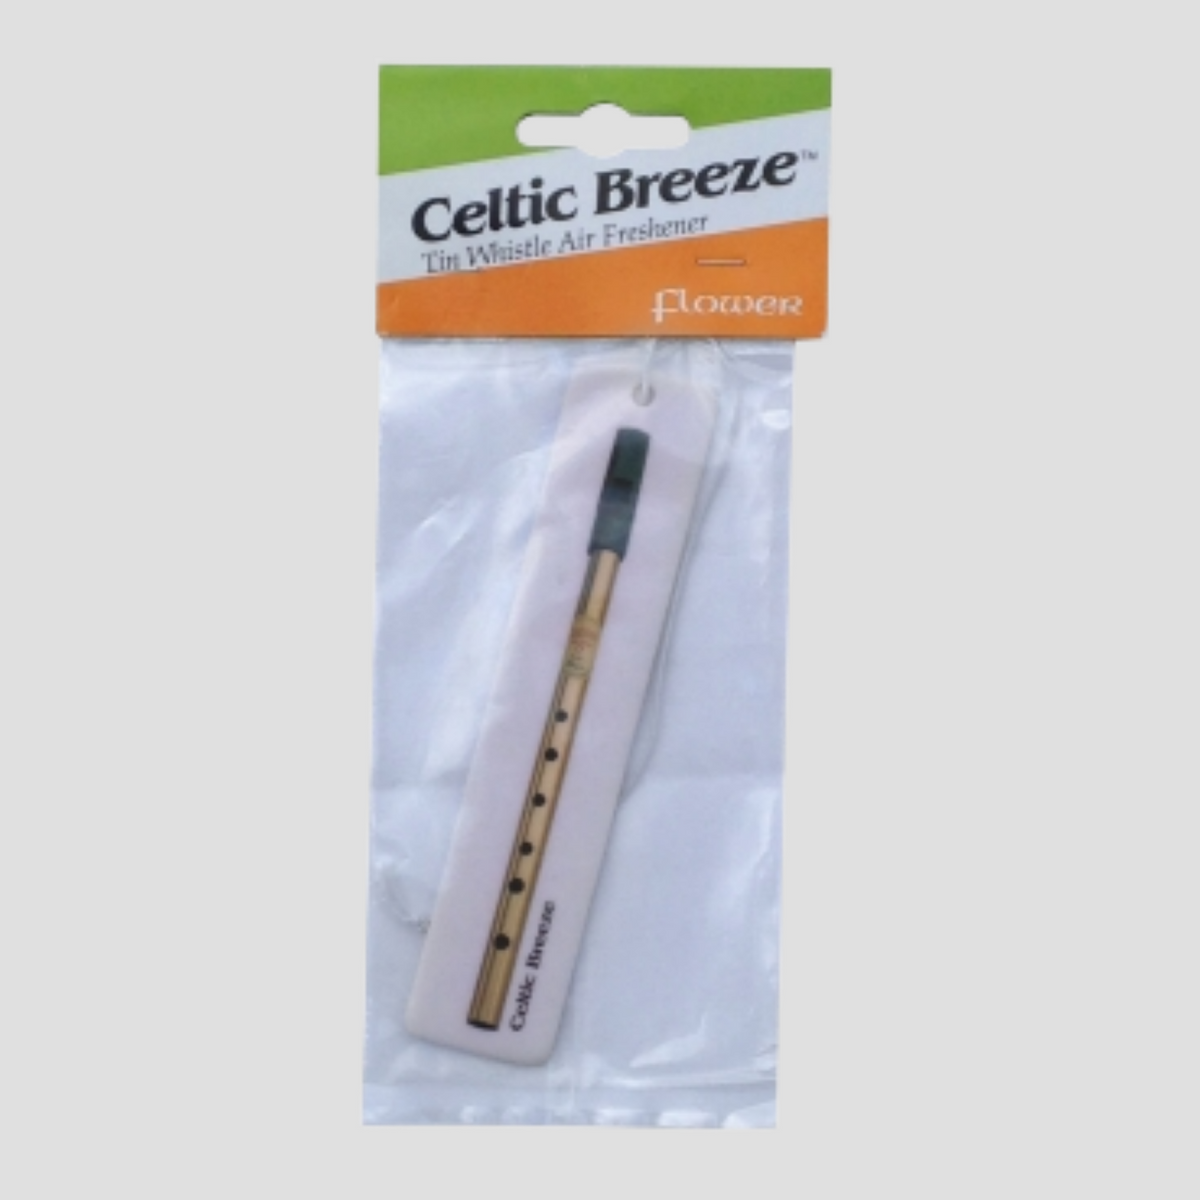 Celtic Breeze Air Freshener : Tin whistle